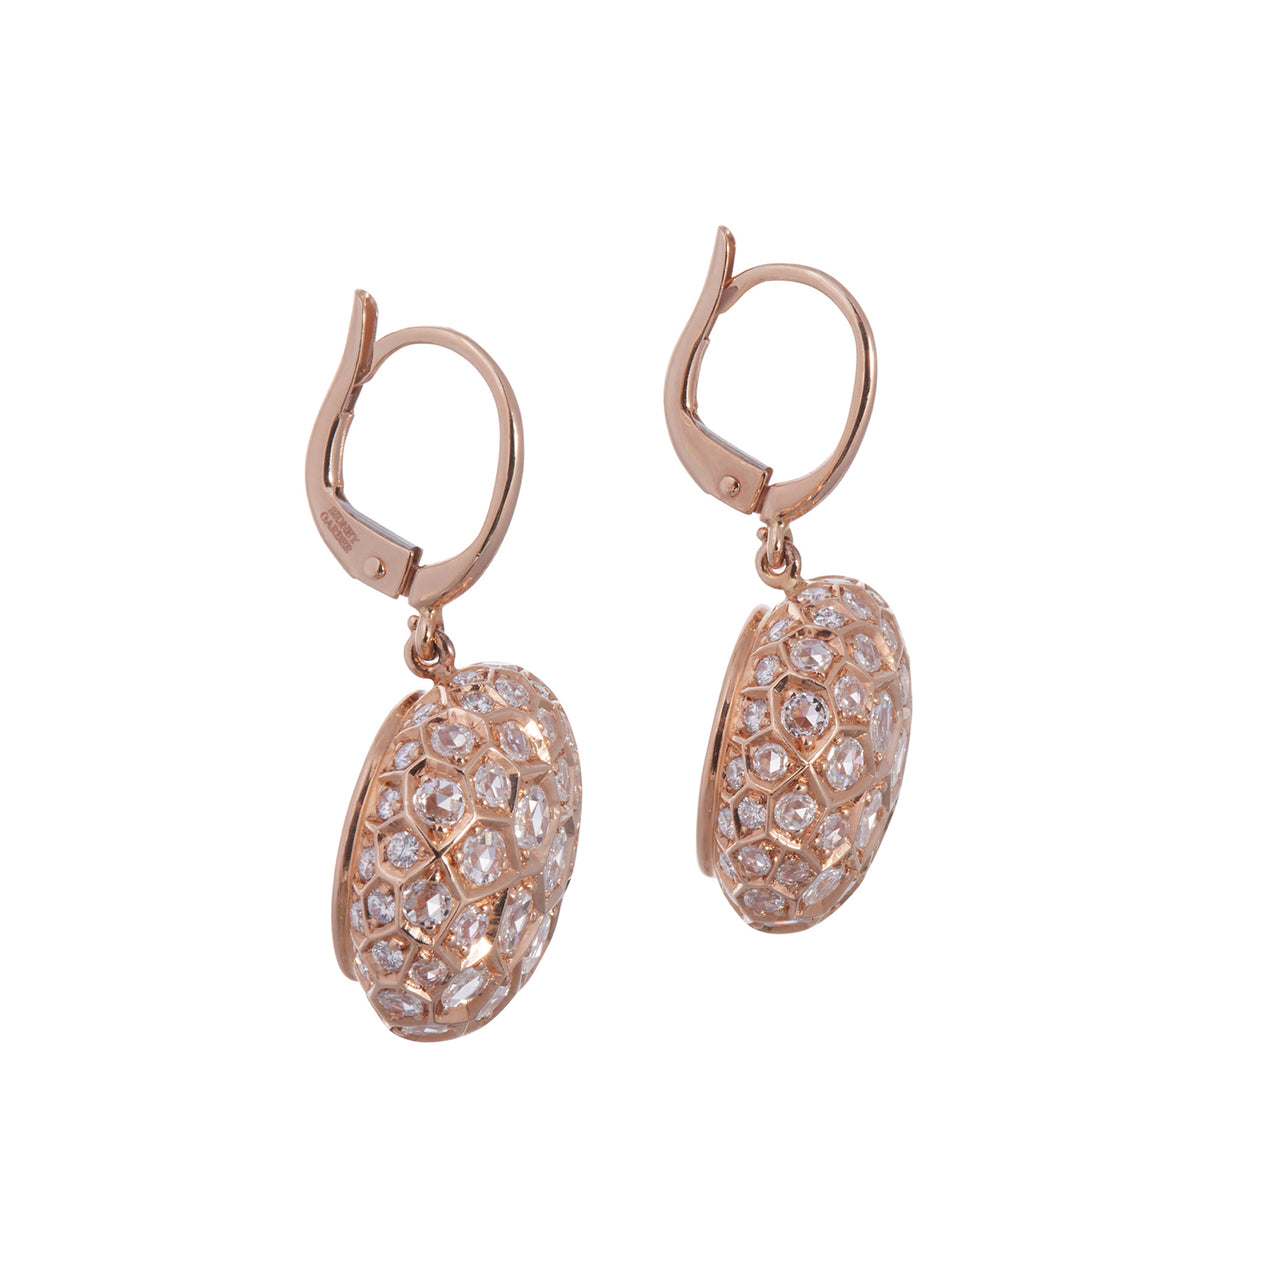 Honeycomb Earrings with Diamonds - Large